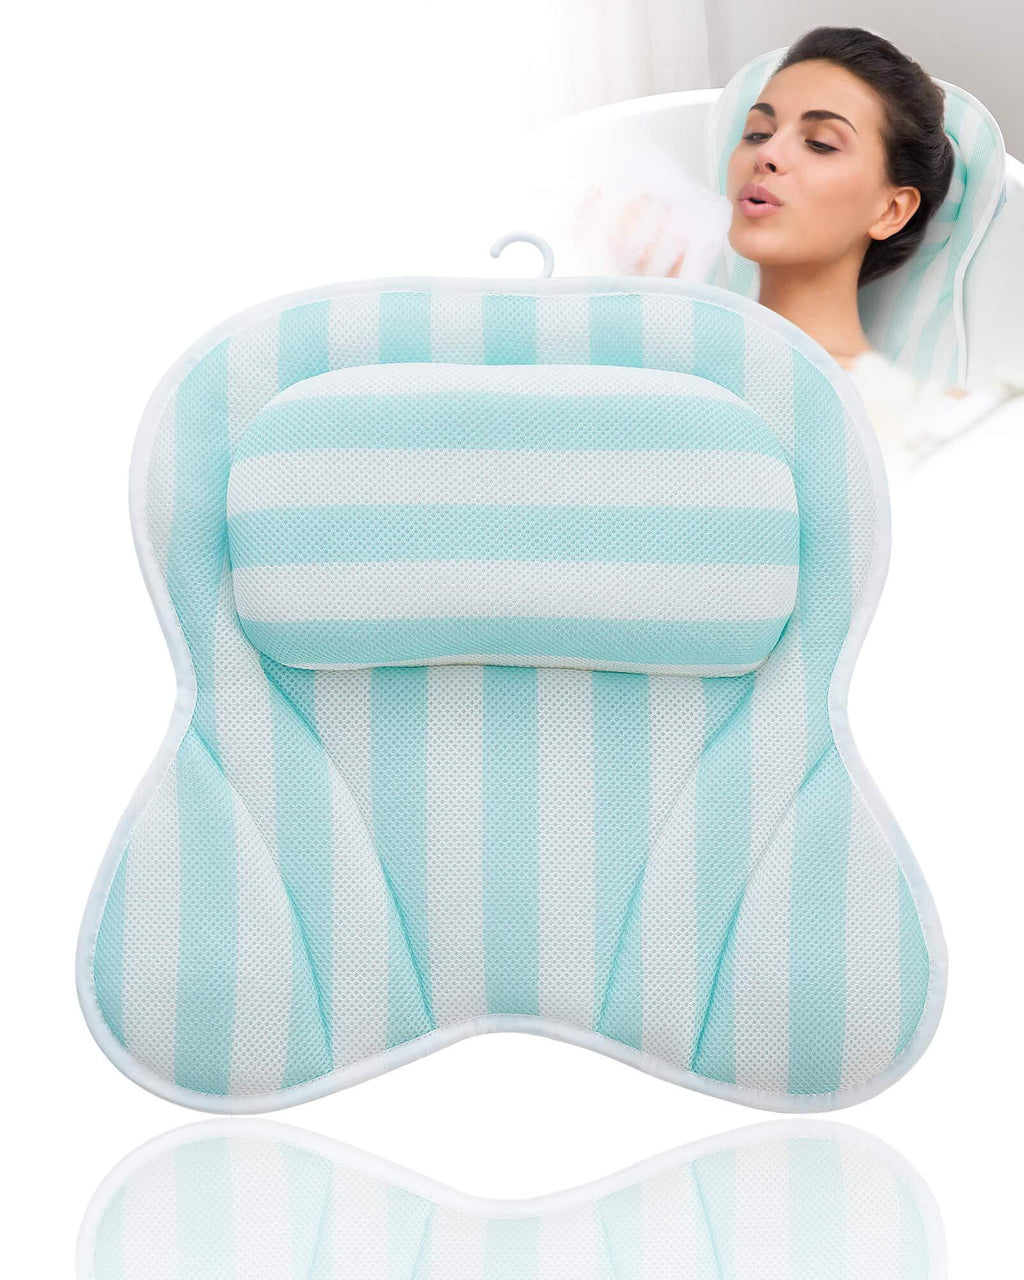 [Australia] - Bath Bathtub pillow, Bath Pillow, SPA Bath tub Pillow mat for Headrest, Neck and Shoulder Support, 4D Air Mesh Breathable Bath Pillow for Women & Men, With 6 Powerful Suction Cups… 